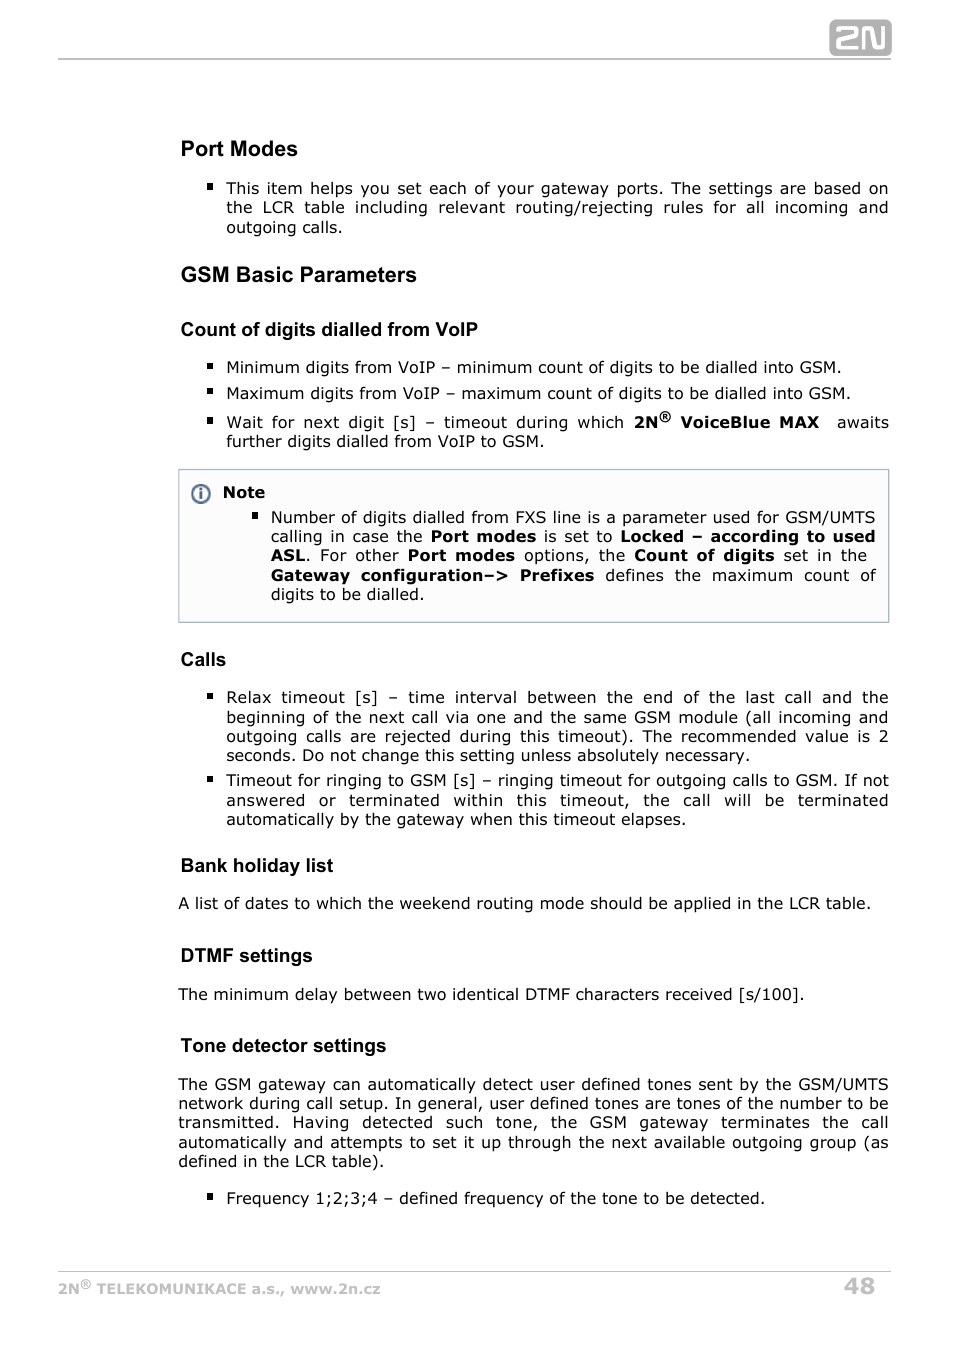 Port modes, Gsm basic parameters | 2N VoiceBlue MAX v1.3 User Manual | Page 48 / 107